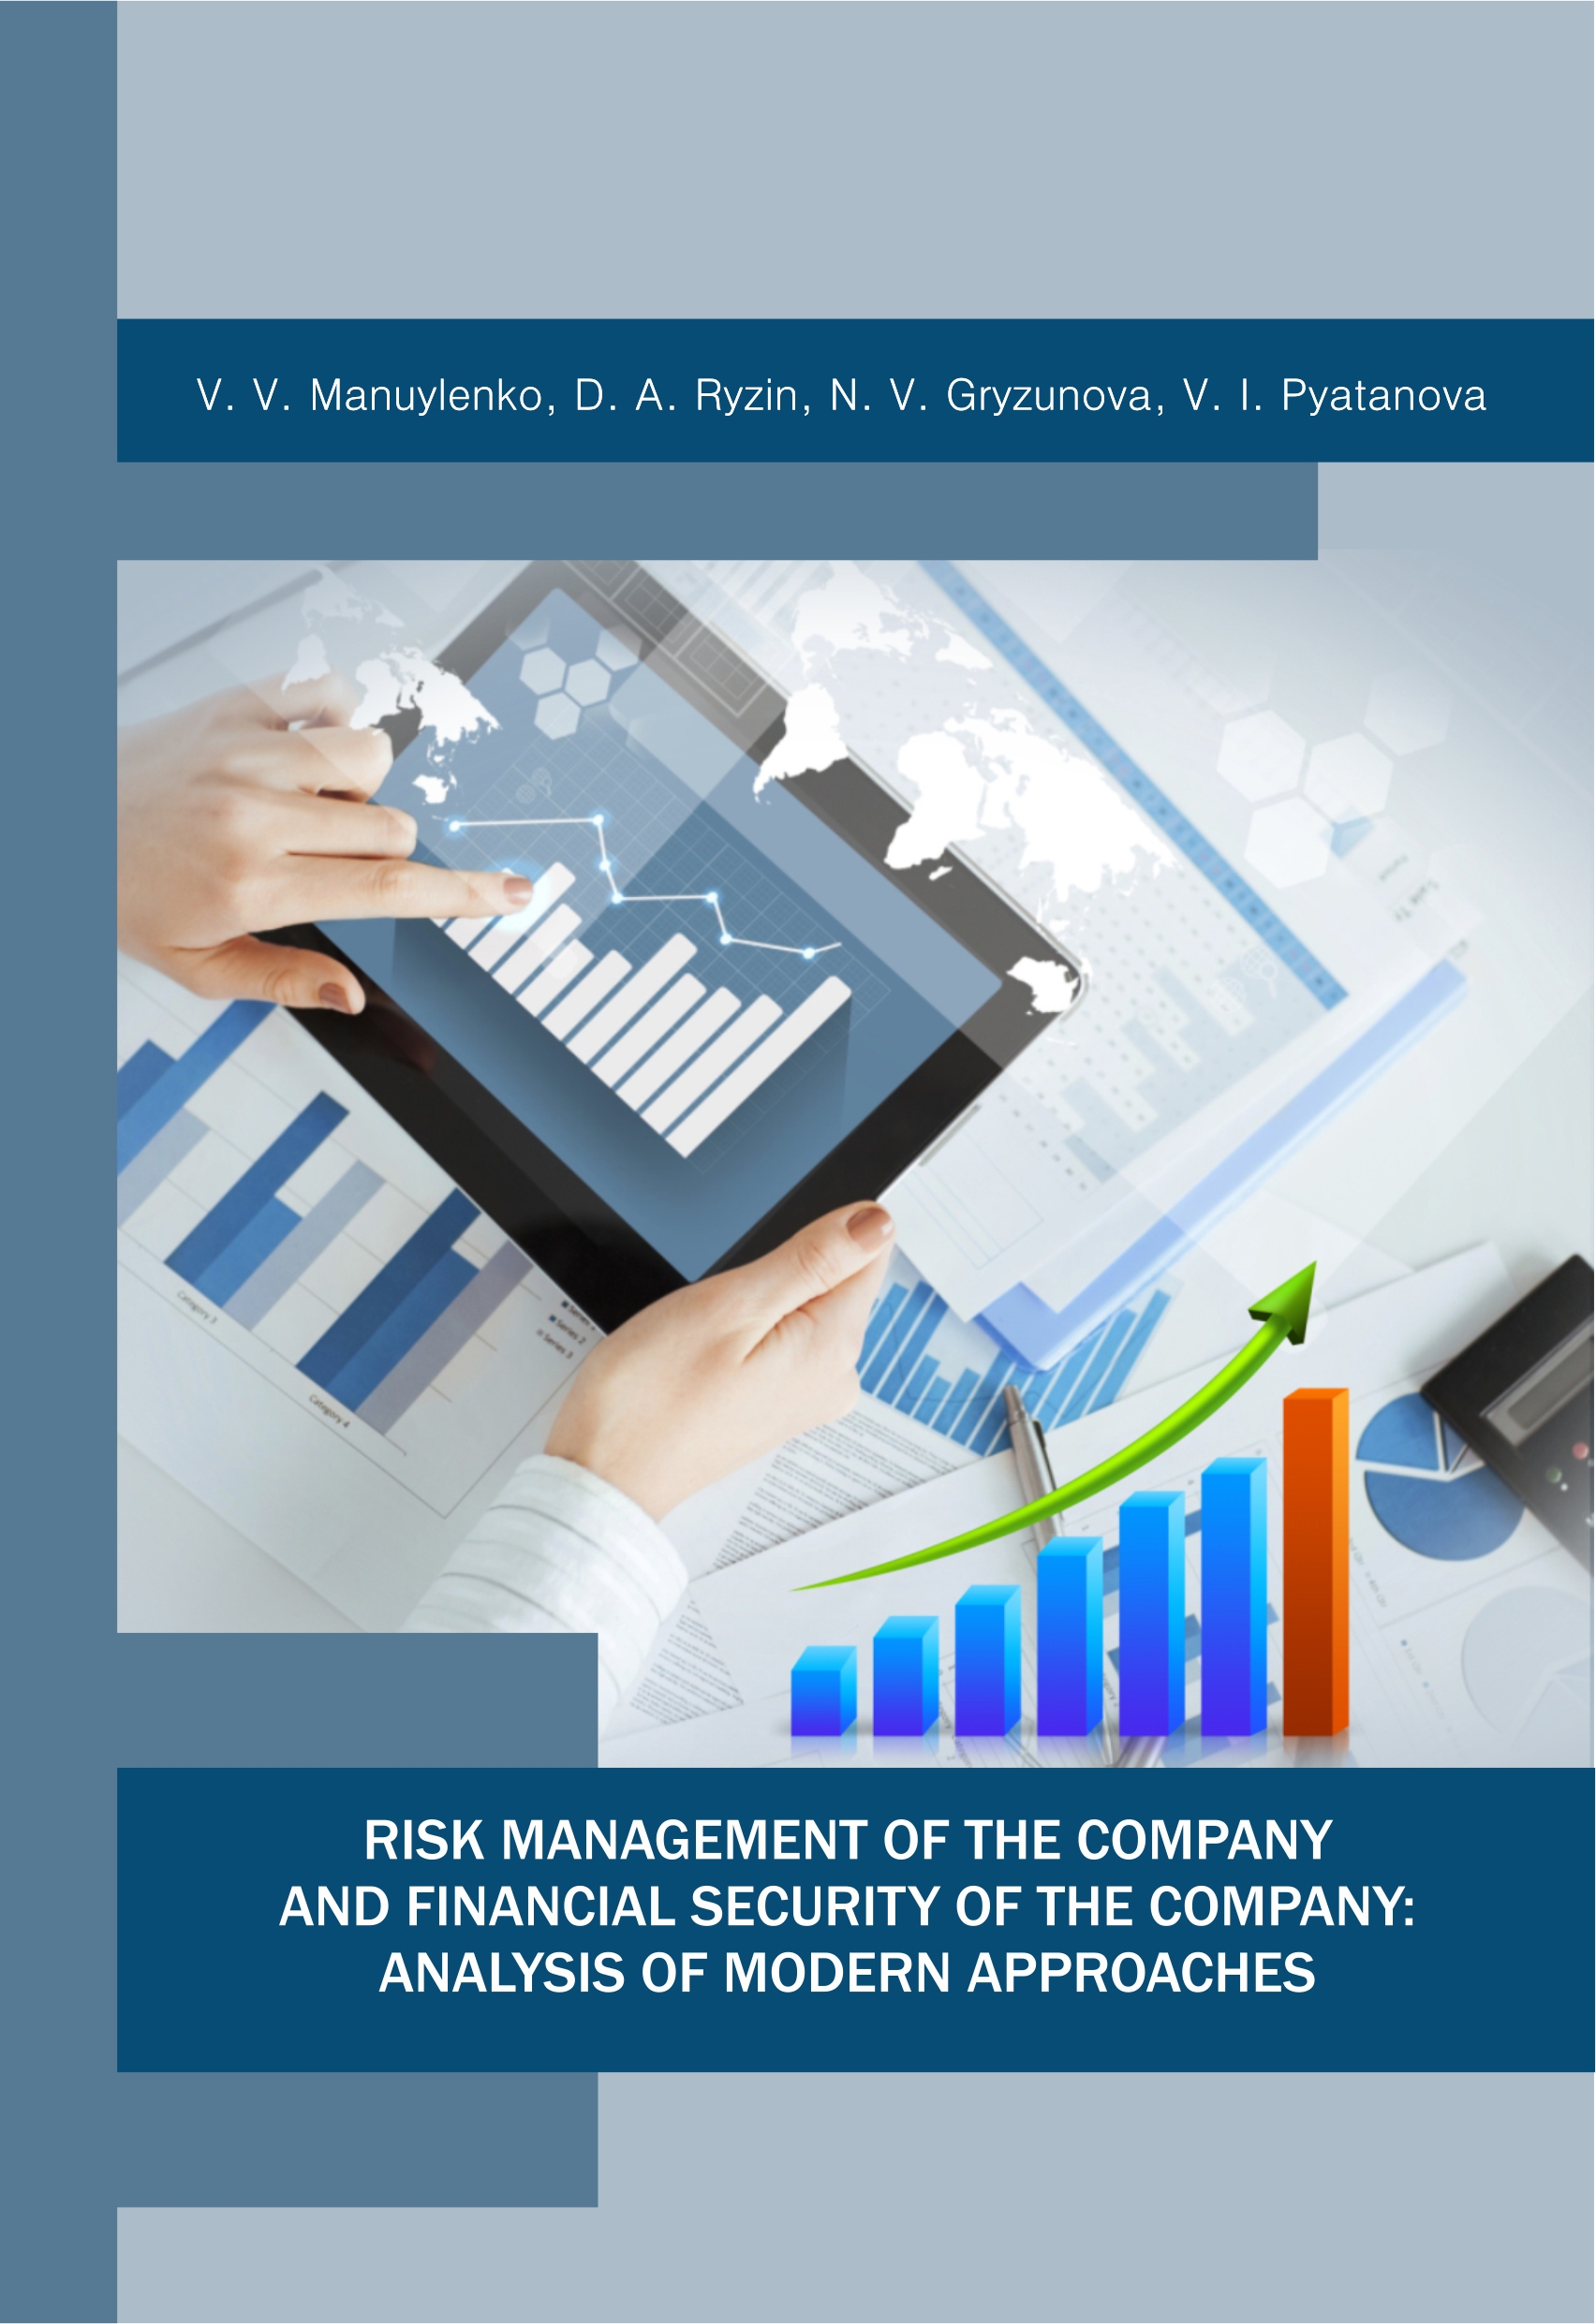 Manuylenko V. V., Razin D. A., Gryzunova N. V., Pyatanova V. I. Risk management of the company and financial security of the company: analysis of modern approaches 